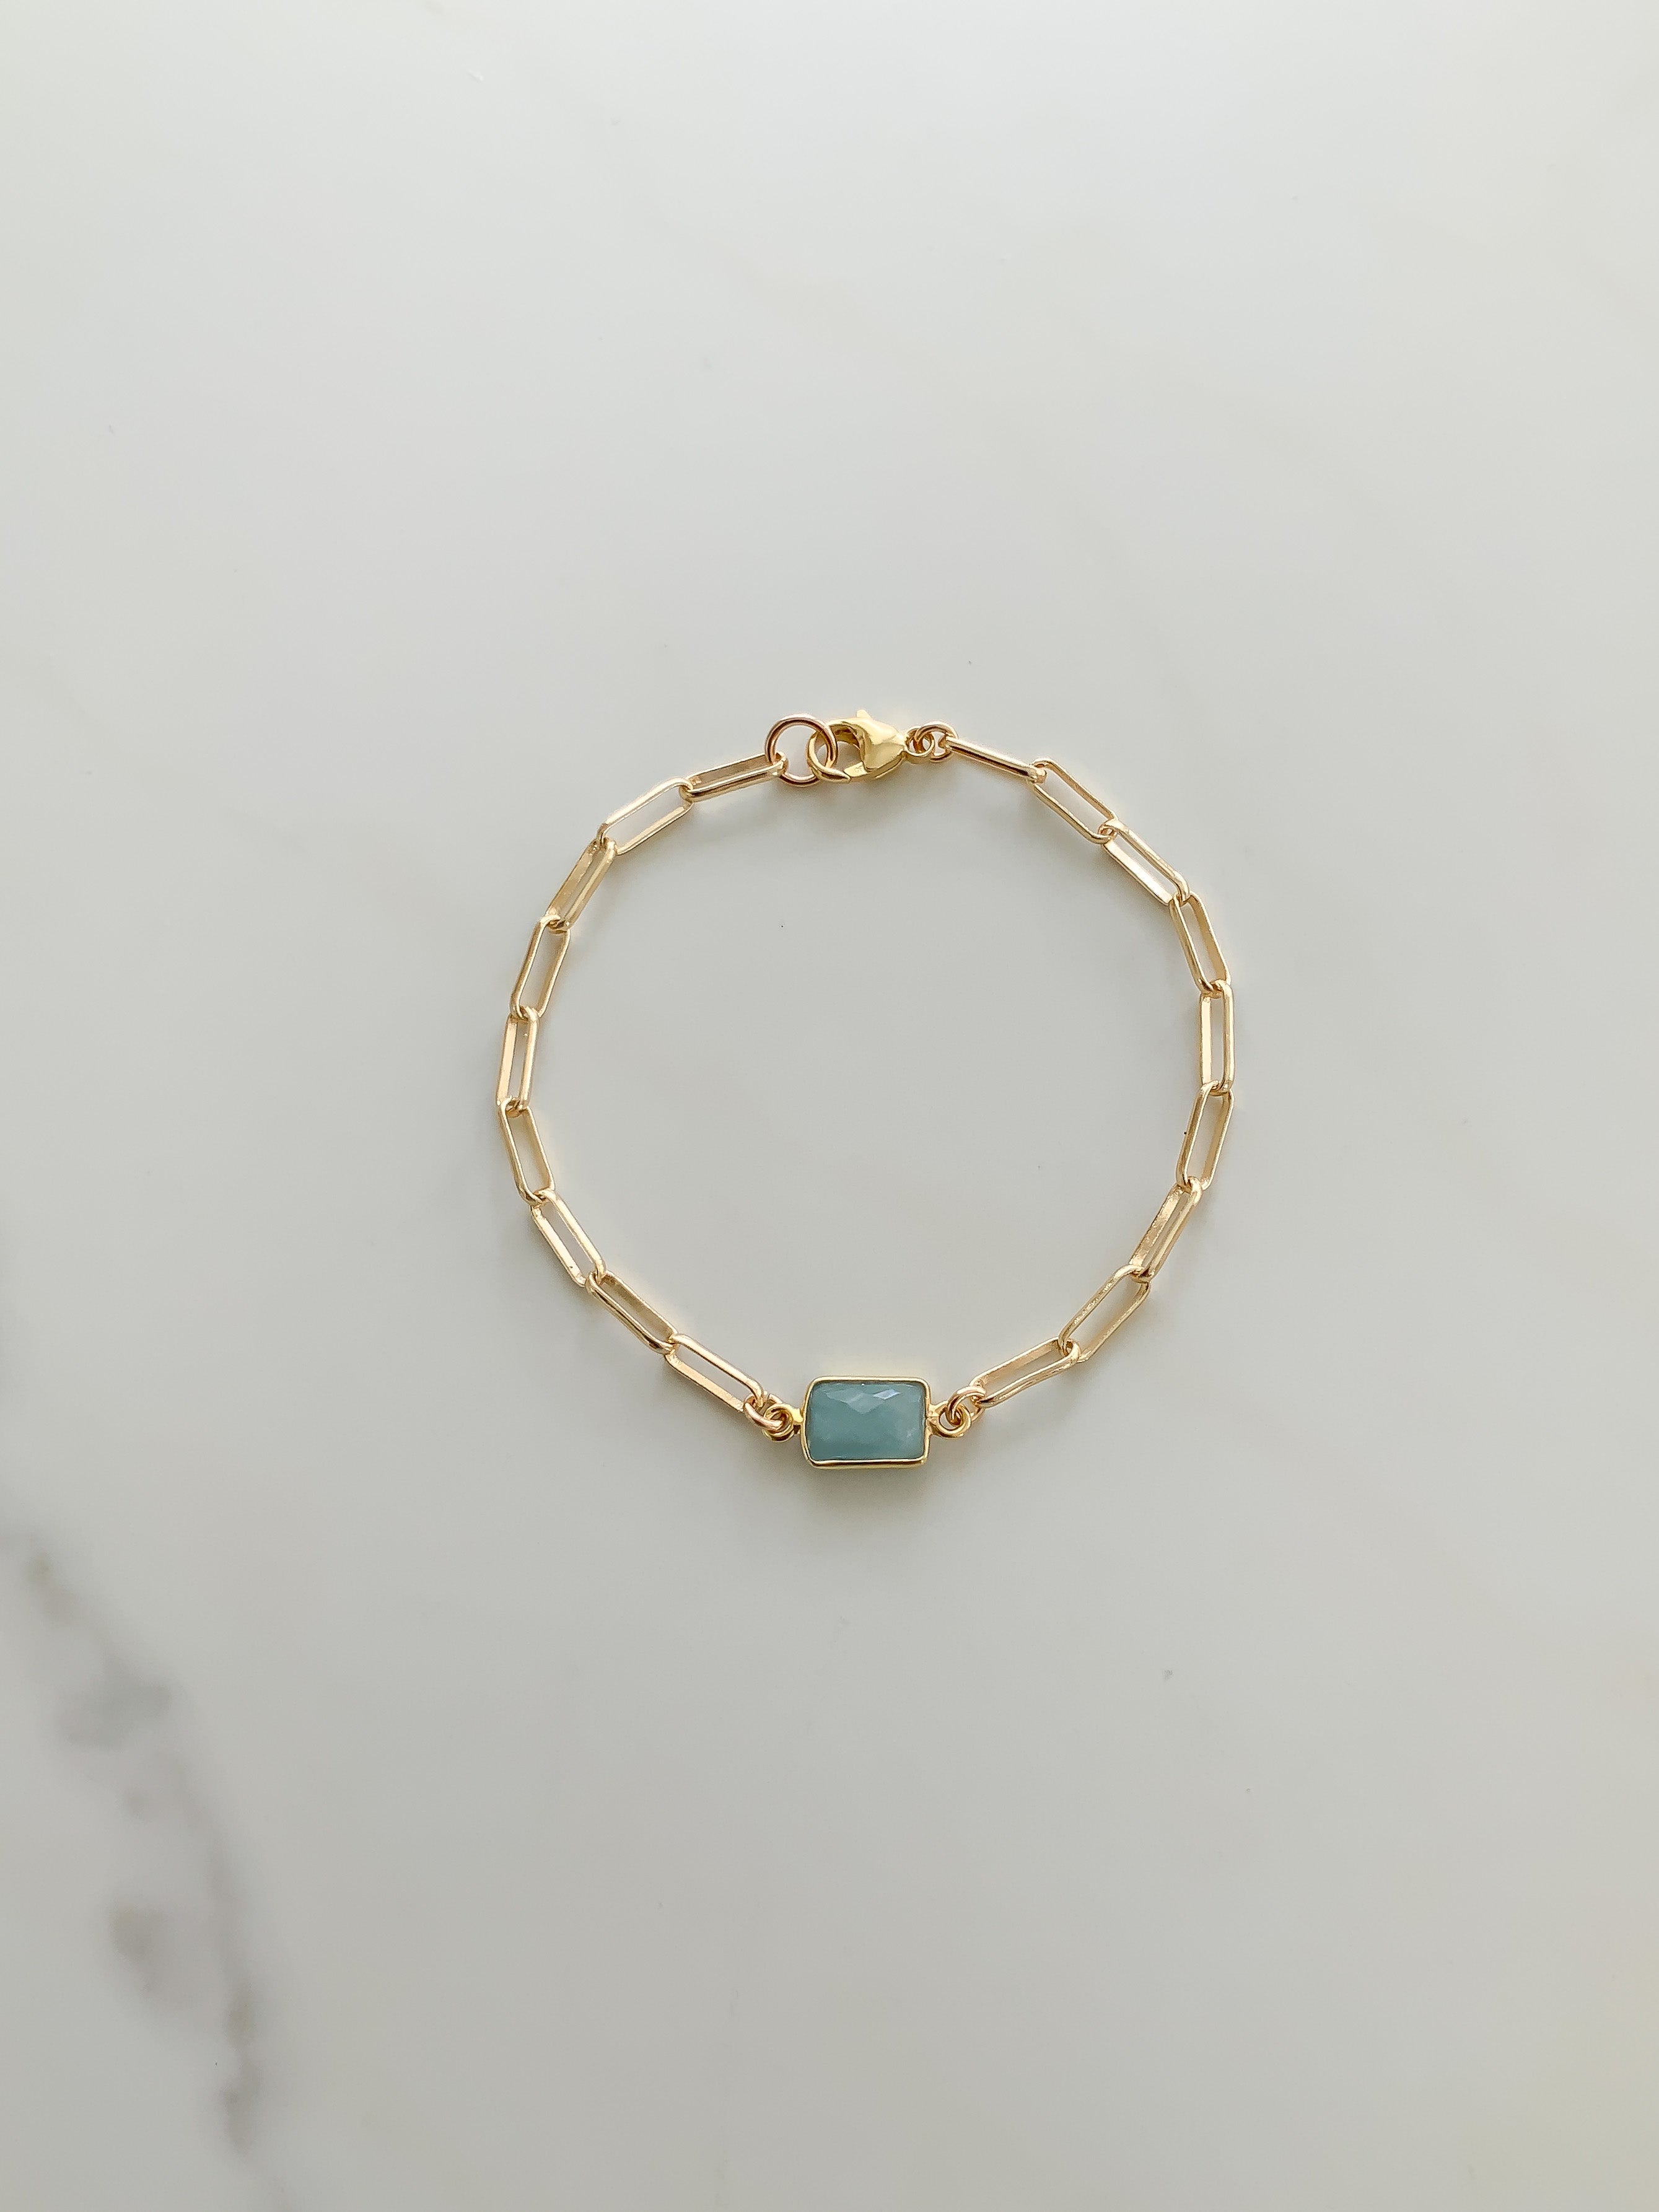 The Galena Aquamarine Bracelet